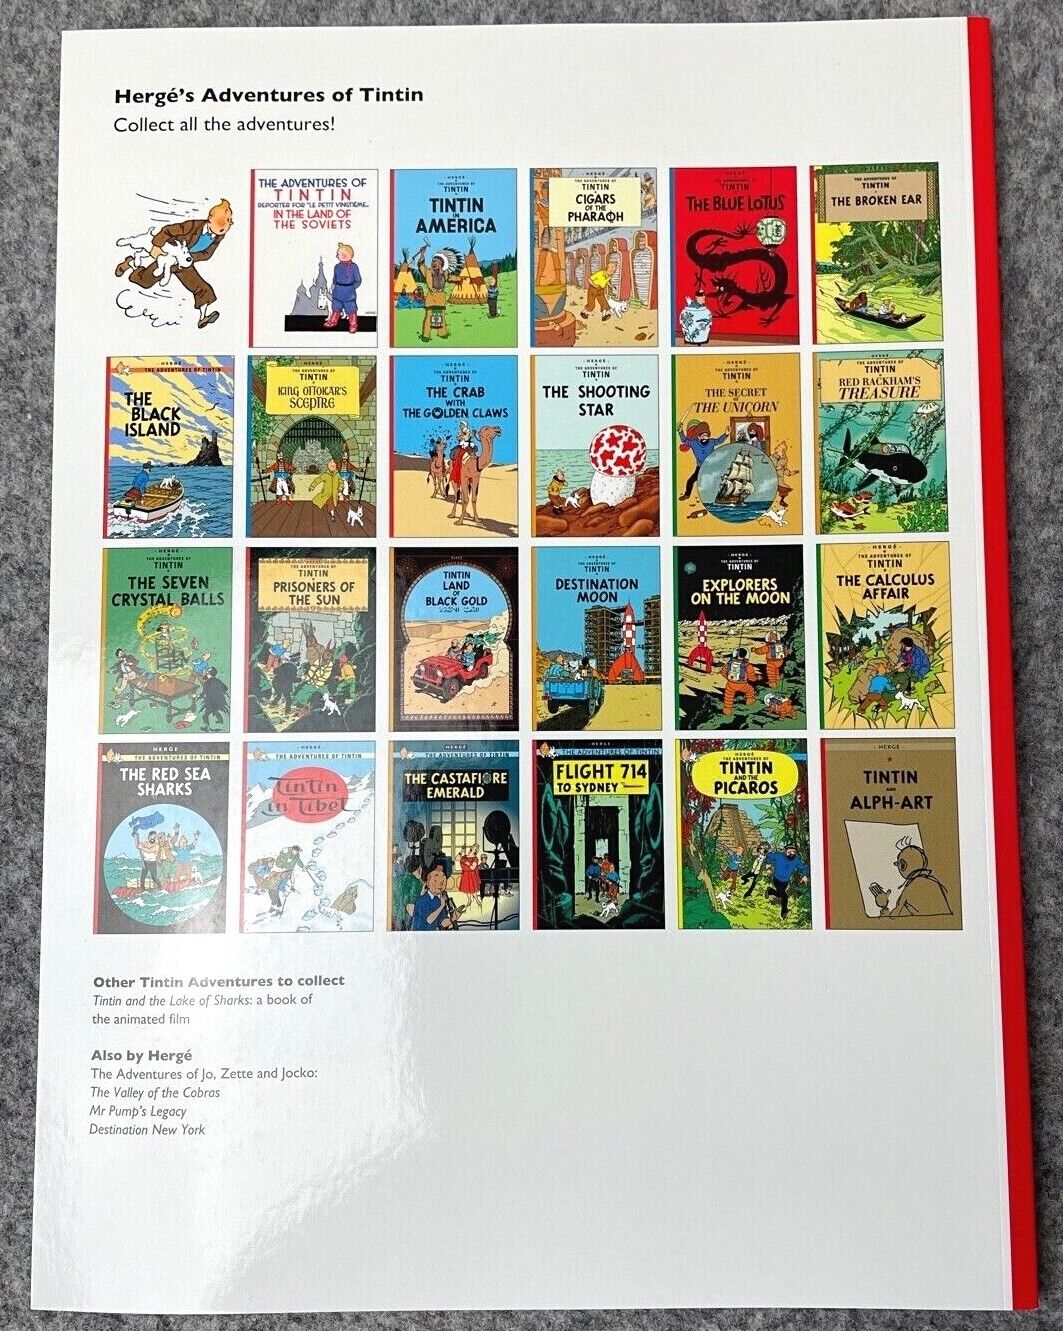 Tintin in America - Farshore 2000s UK Edition Tintin Book Paperback Herge